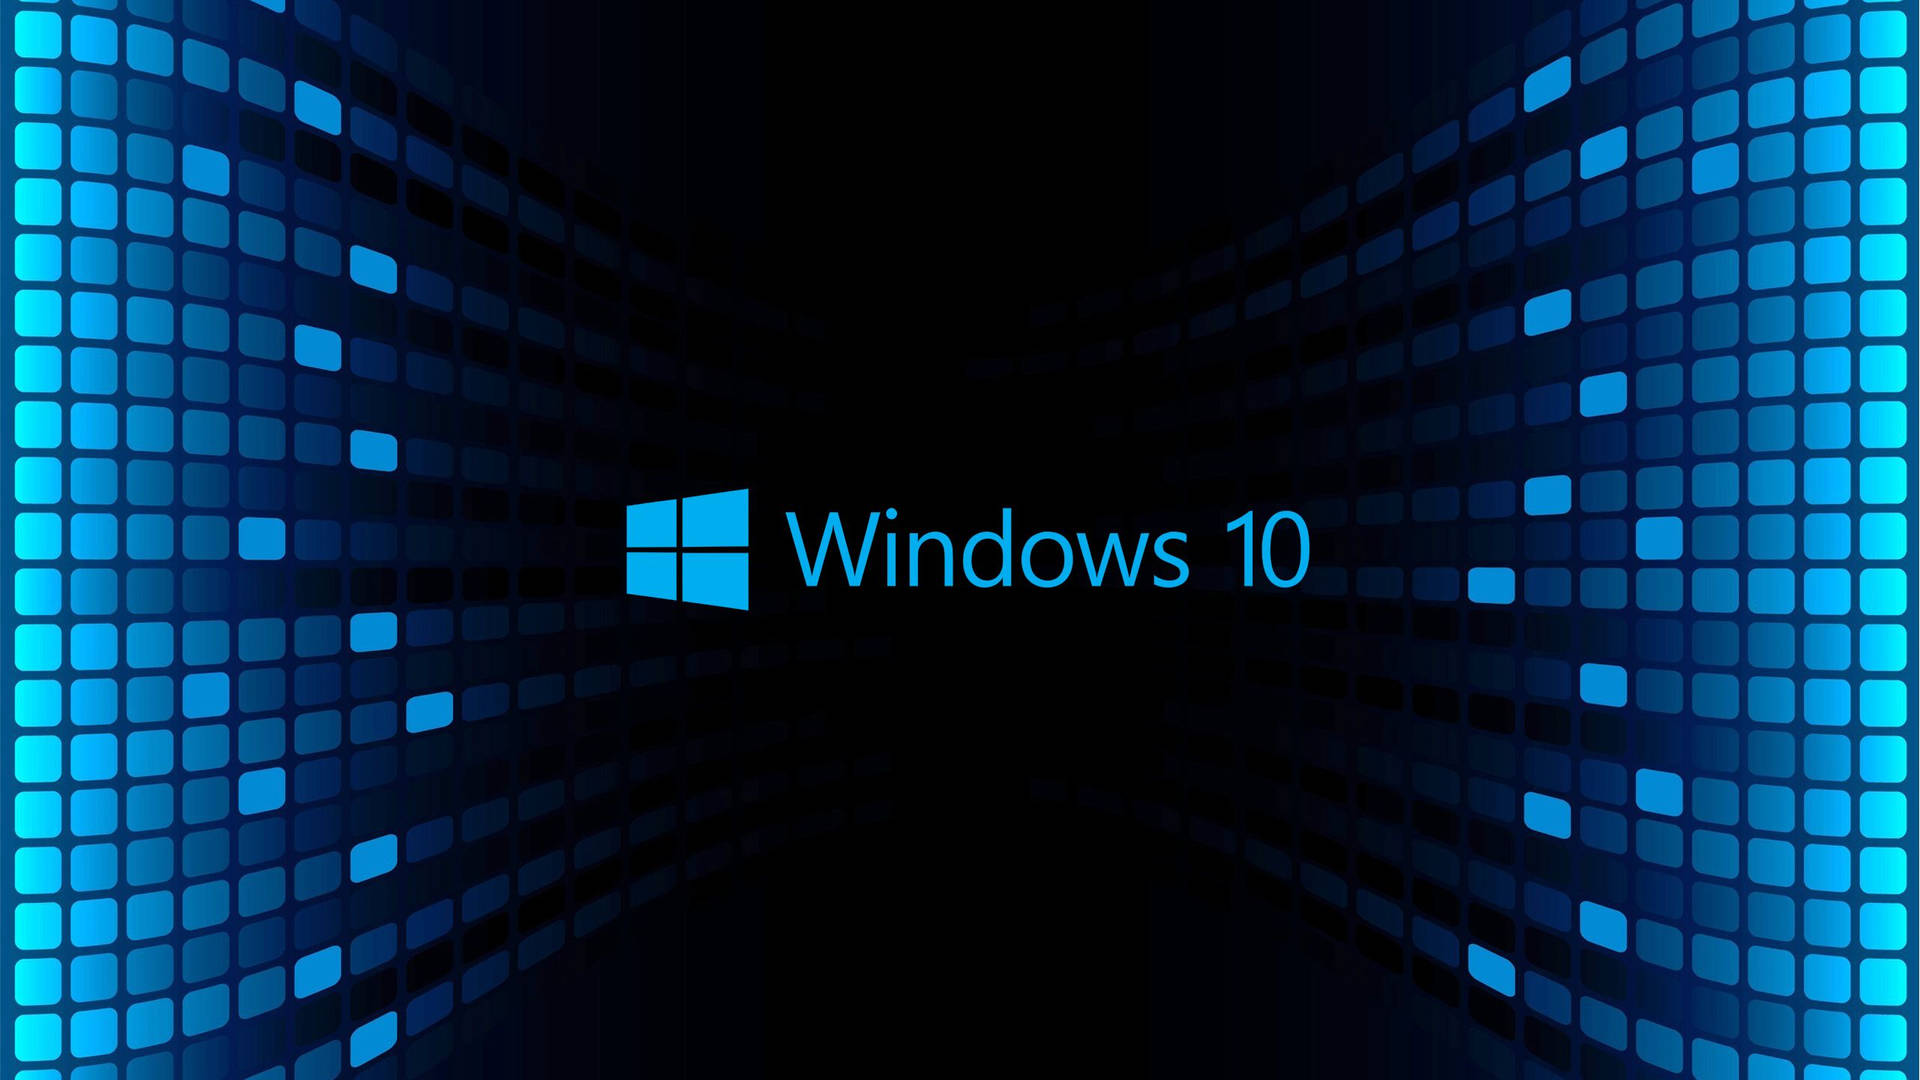 Windows 10 Hd Blue Squares Wallpaper